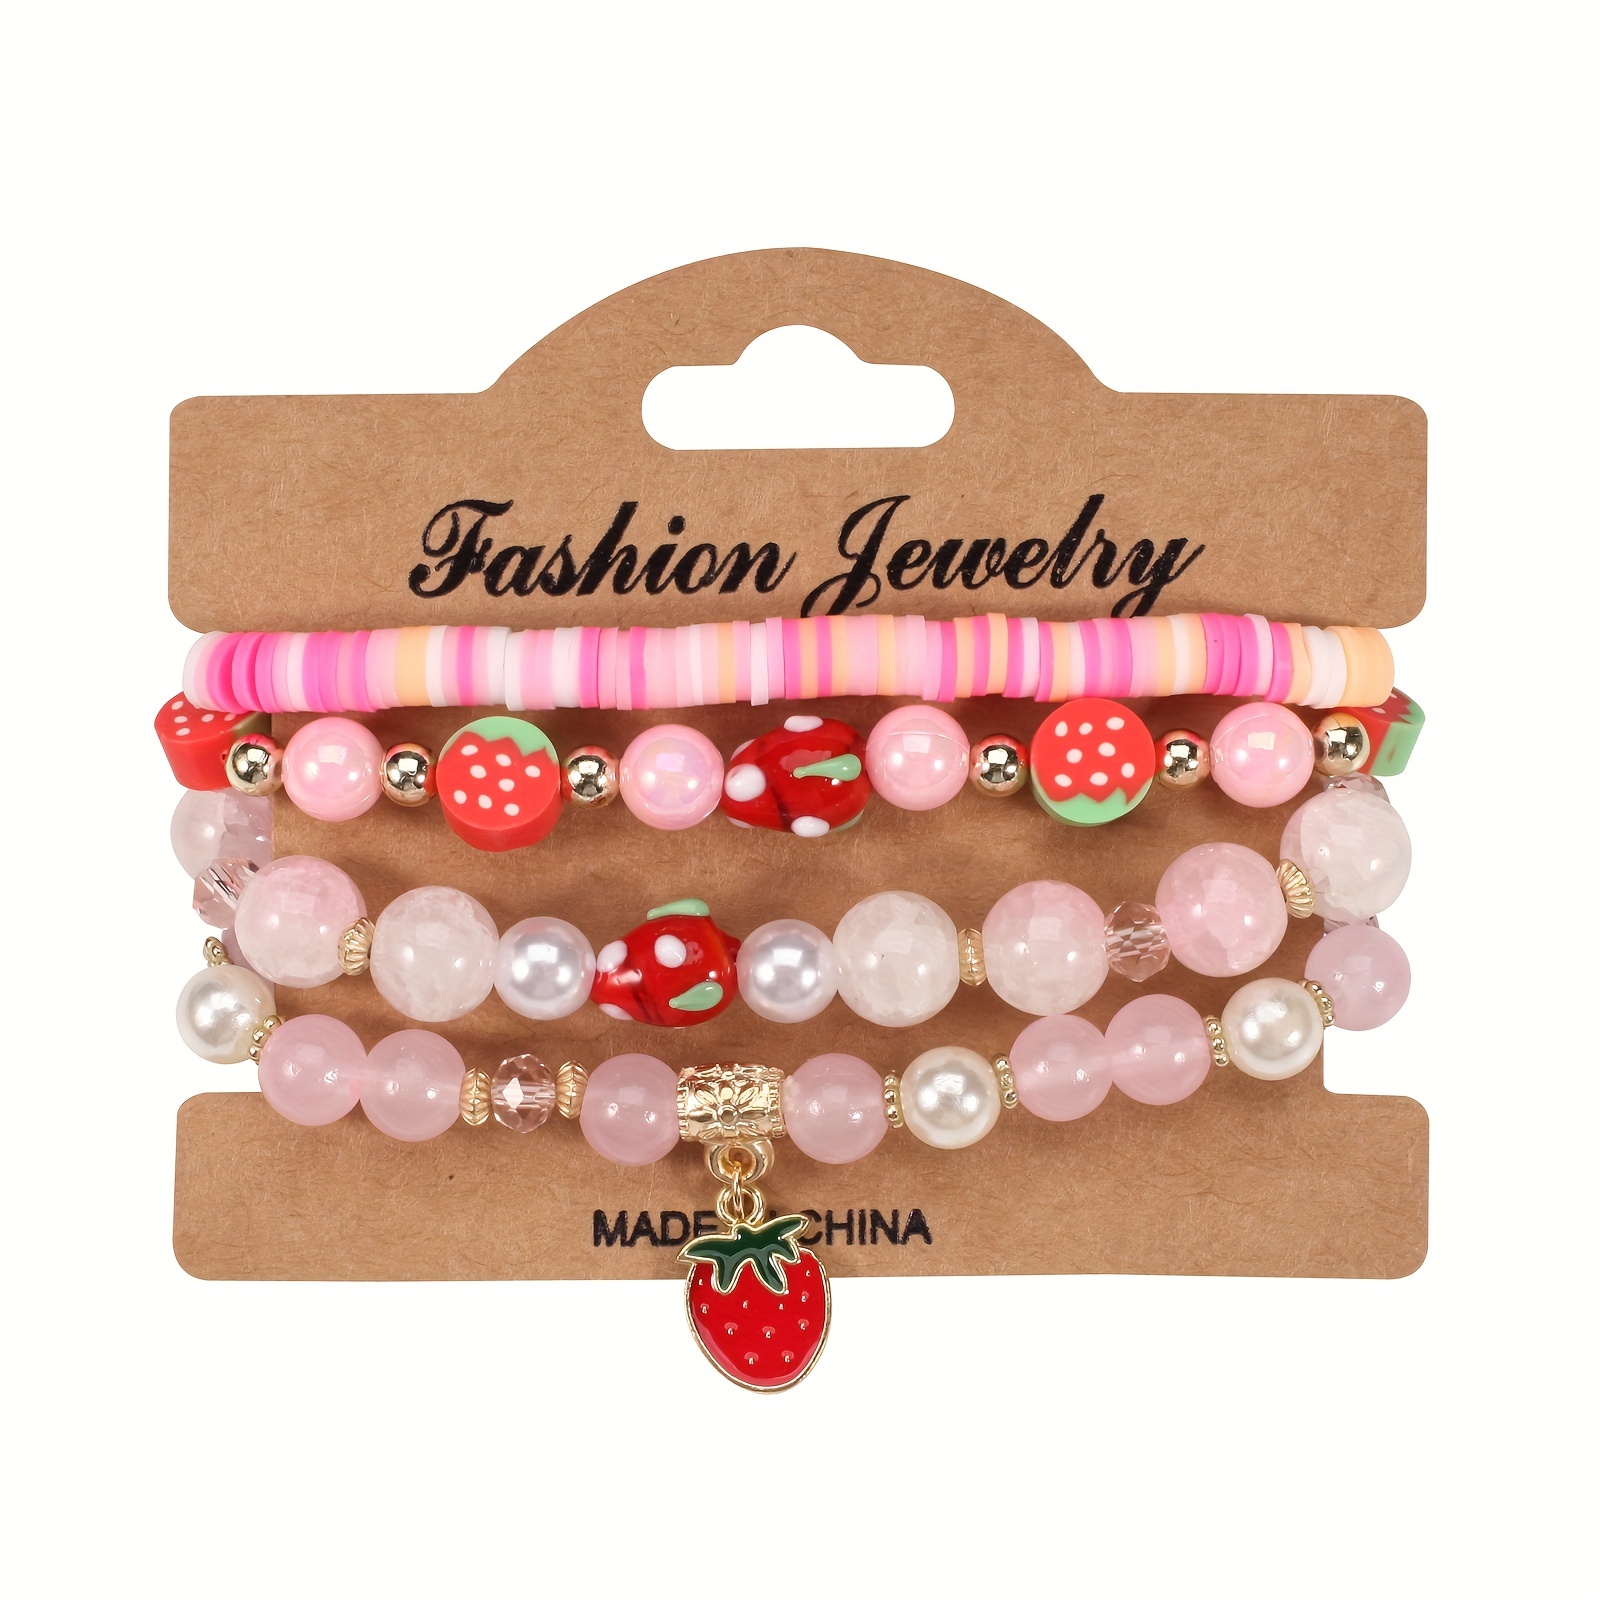 3 Pcs Kids Wrist Decor Girls Wrist Chain Fruit Pendants Bracelets